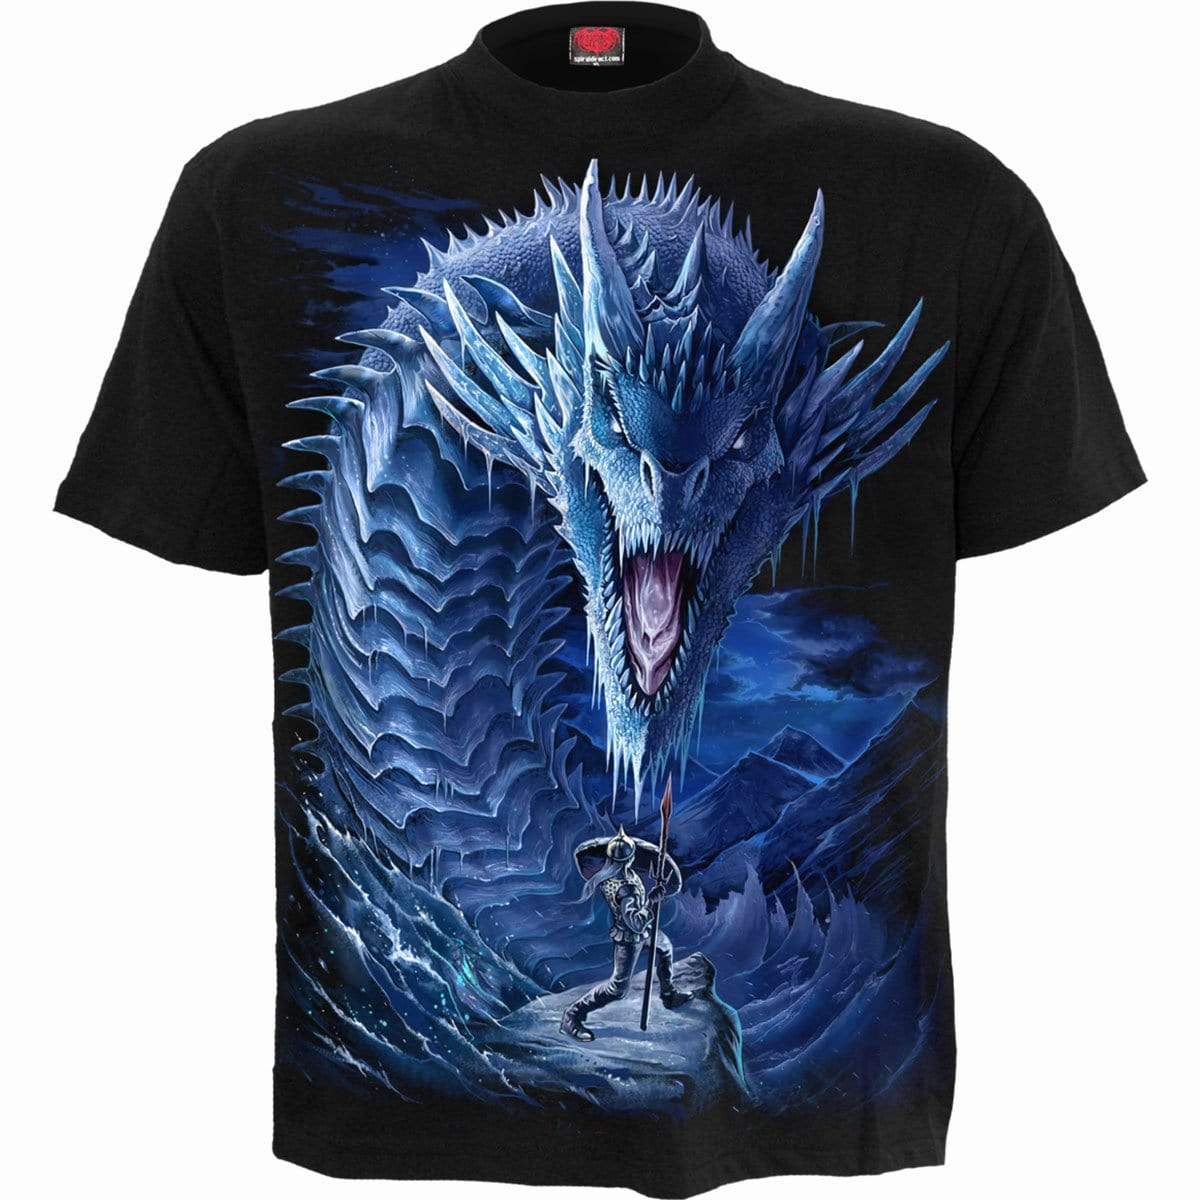 ICE DRAGON - T-Shirt Sort